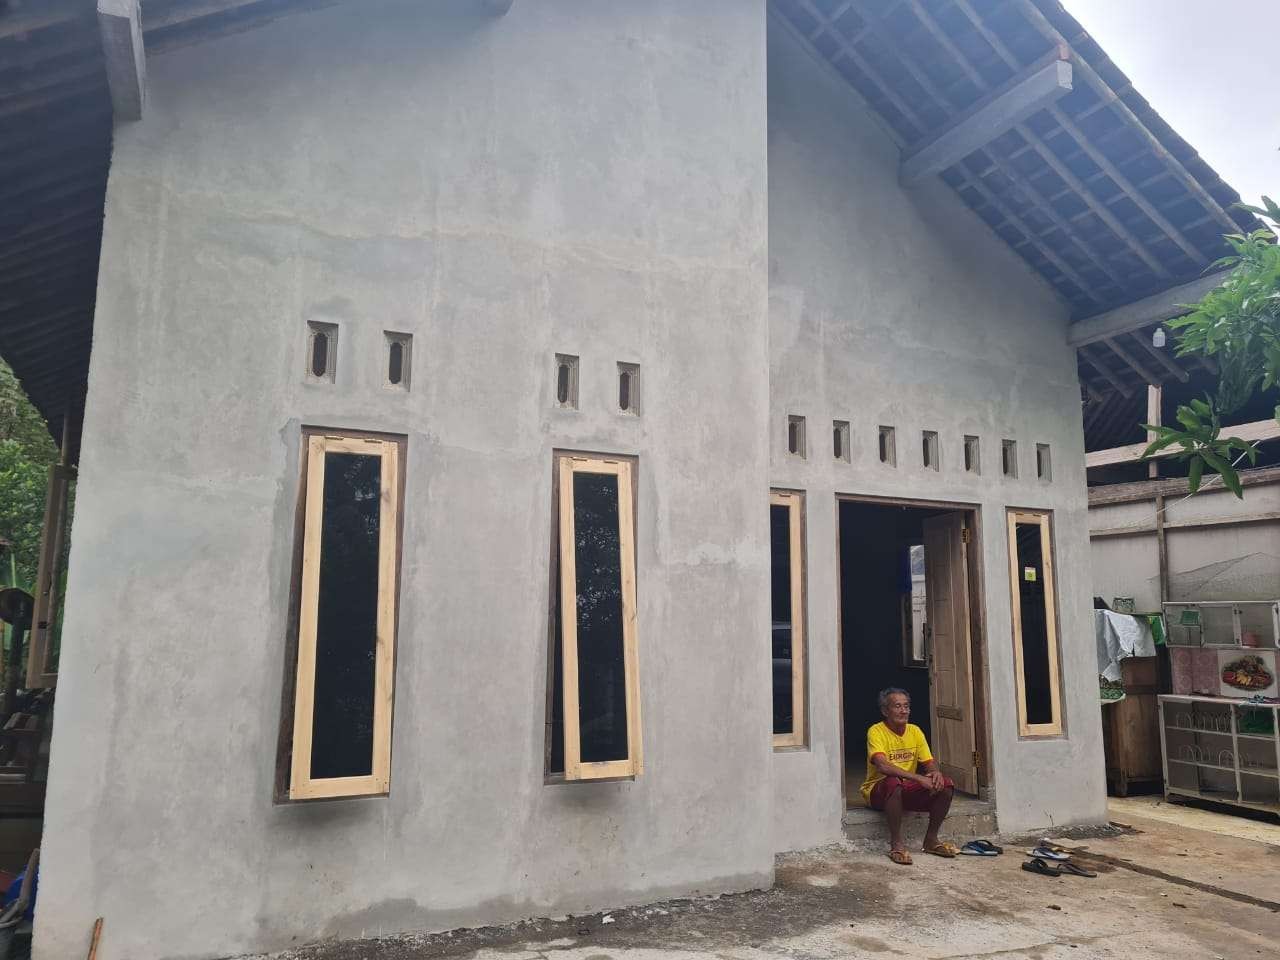 Wagiman, warga Desa Wadas Kecamatan Bener, Purworejo bahagia setelah menempati rumah baru bantuan dari Gubernur Jawa Tengah Ganjar Pranowo. (Foto: Dok Jateng)